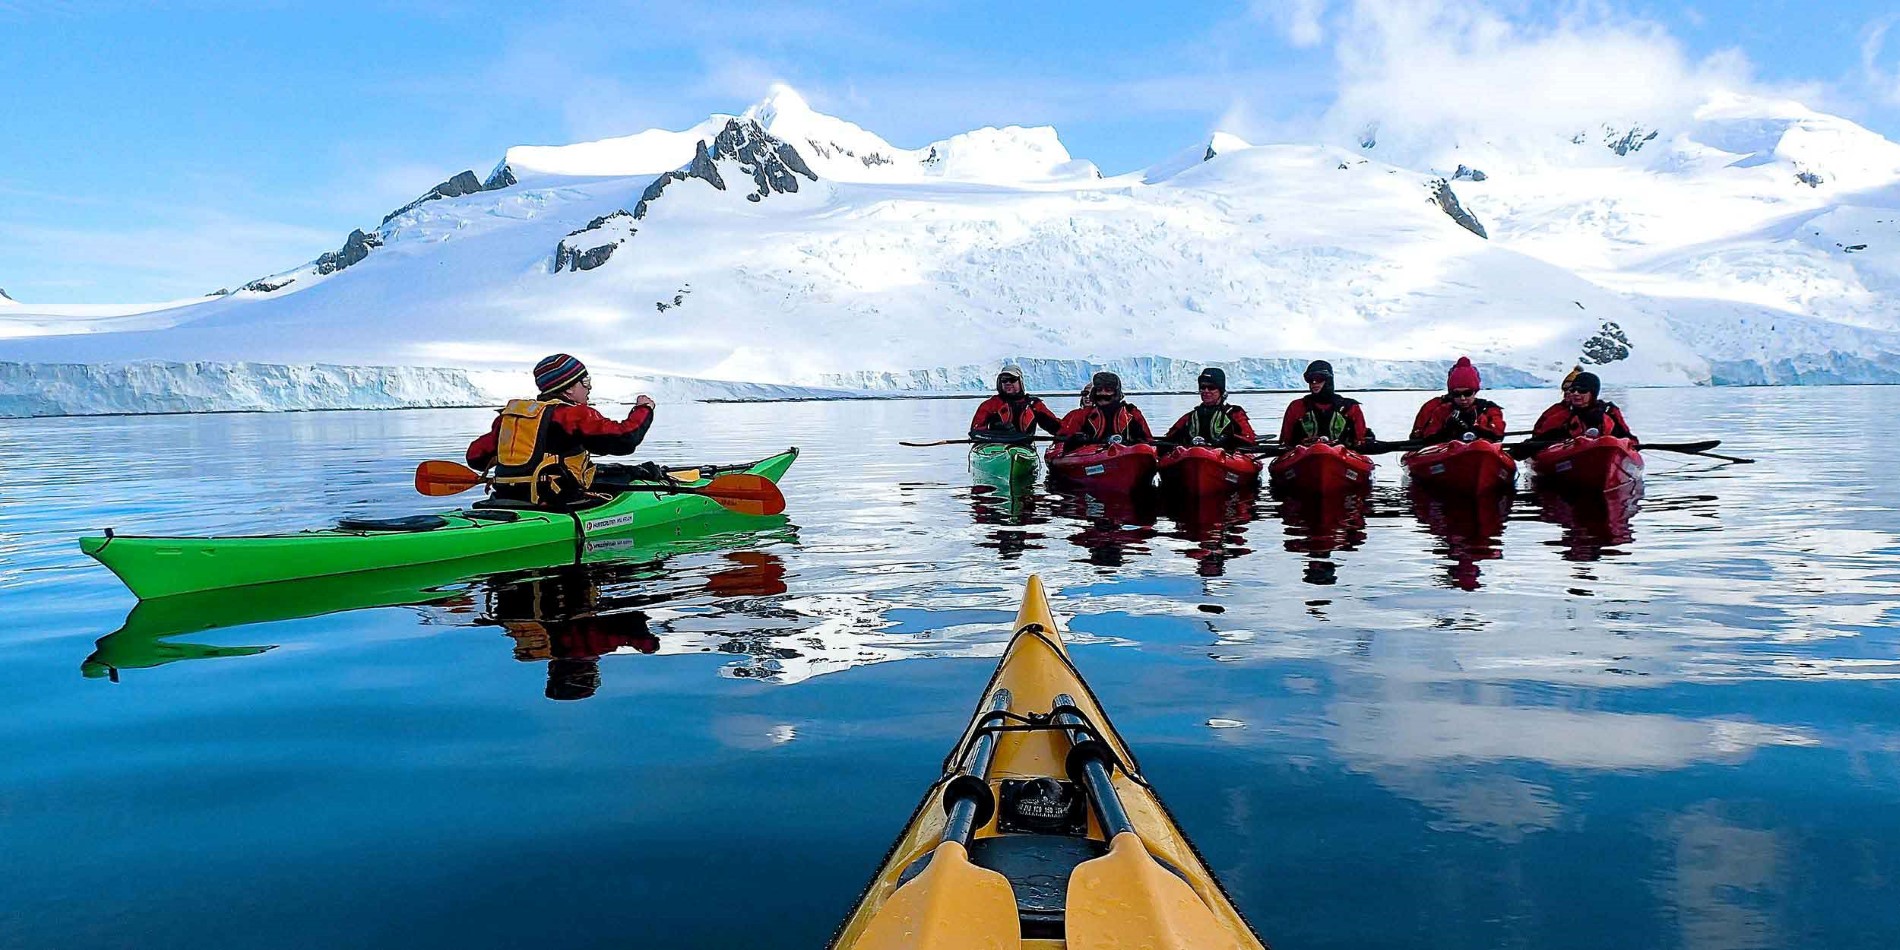 People in kayaks in antarctic landscape